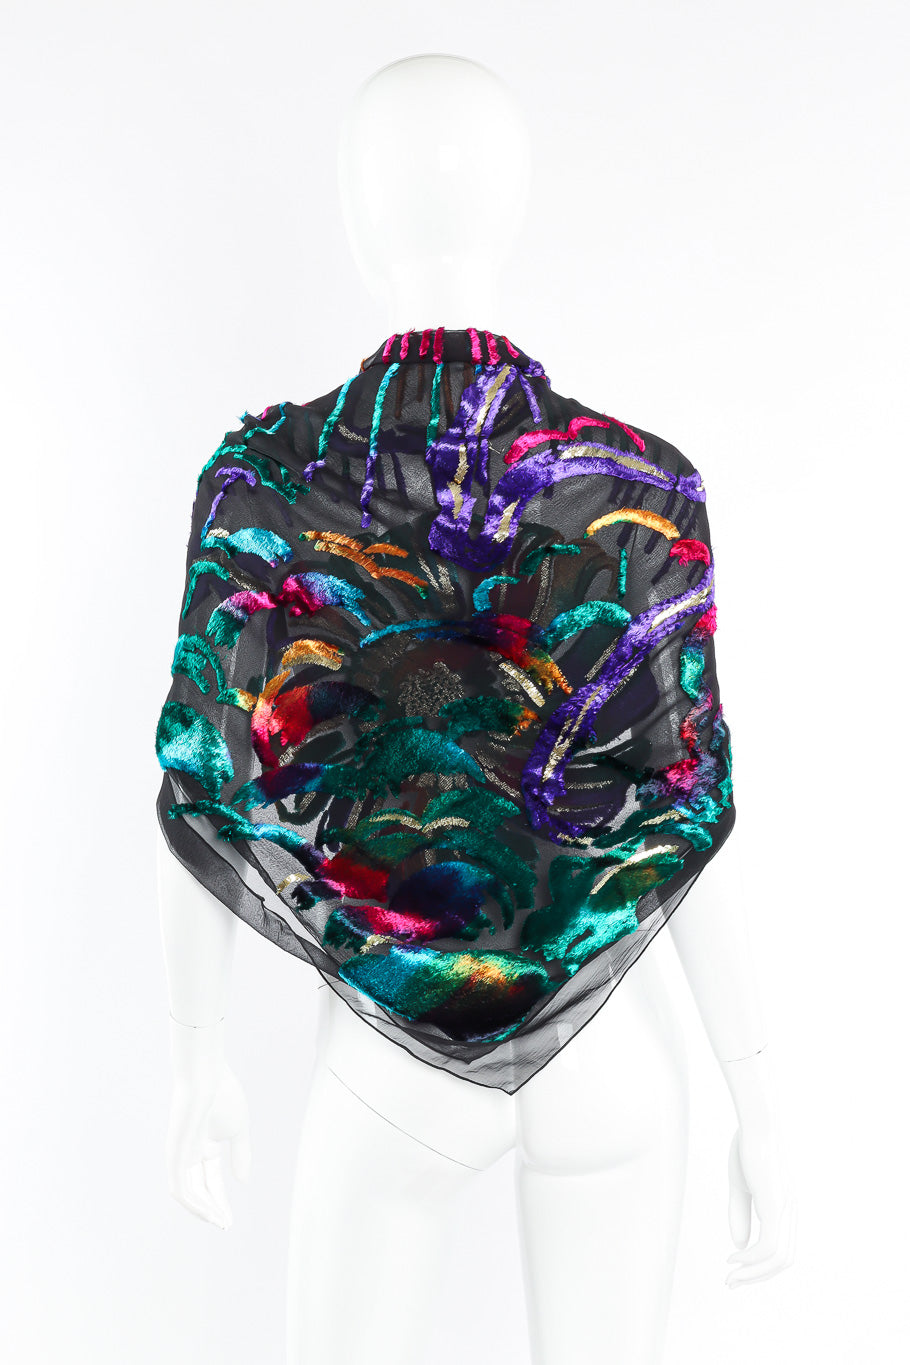 Jewel tone velvet scarf by Paco Rabanne tied on mannequin shoulders back @recessla